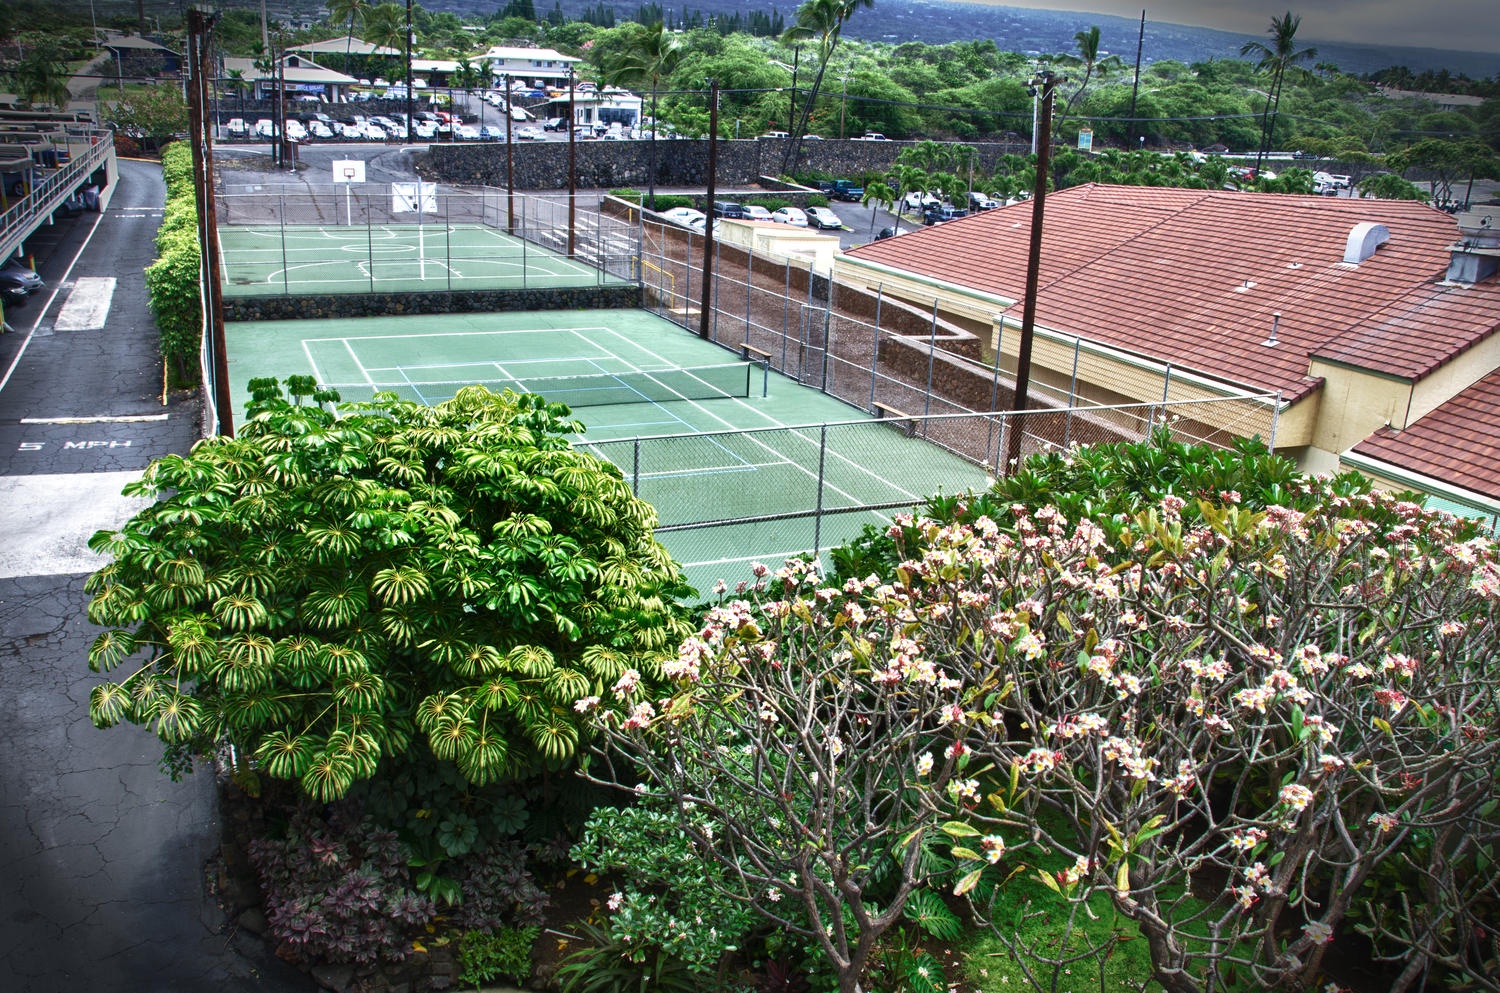 Kailua Kona Vacation Rentals, Kona Alii 512 - Community sports area where you can play tennis or basketball.